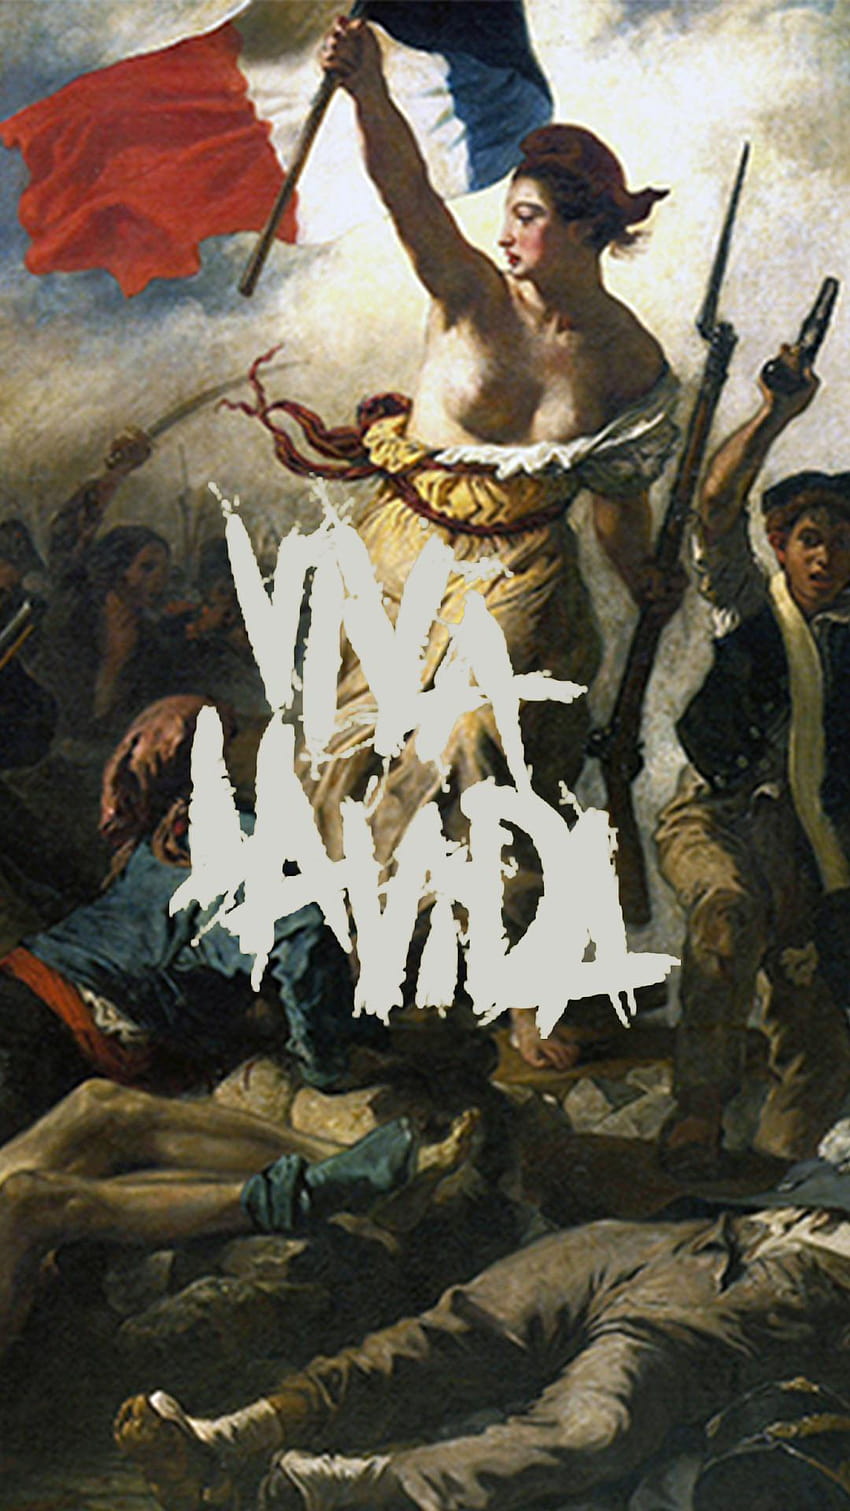 A Viva La Vida iPhone : コールドプレイ HD電話の壁紙